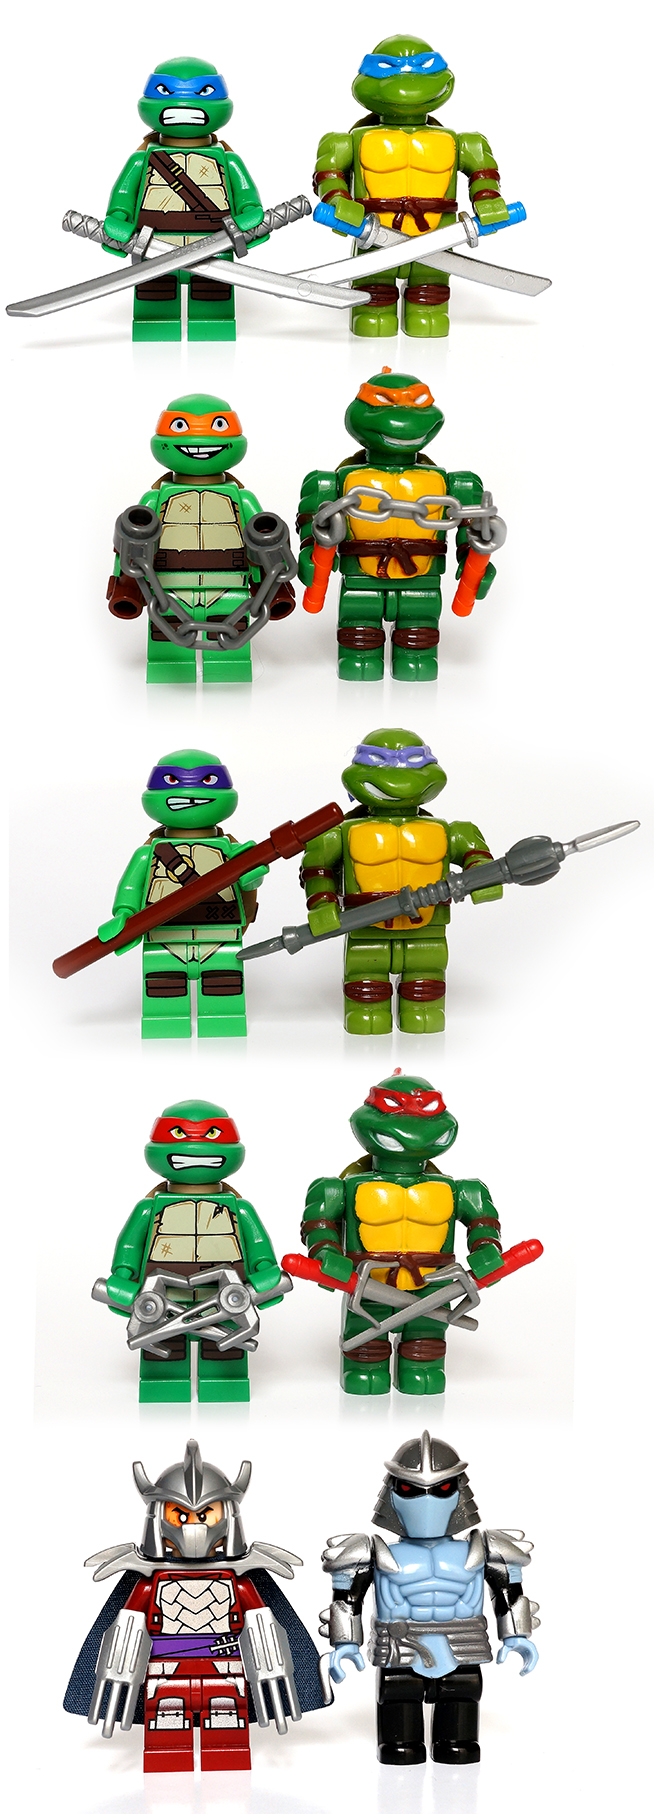 Afficher le sujet - LEGO Tortues Ninja - Gamme 2013